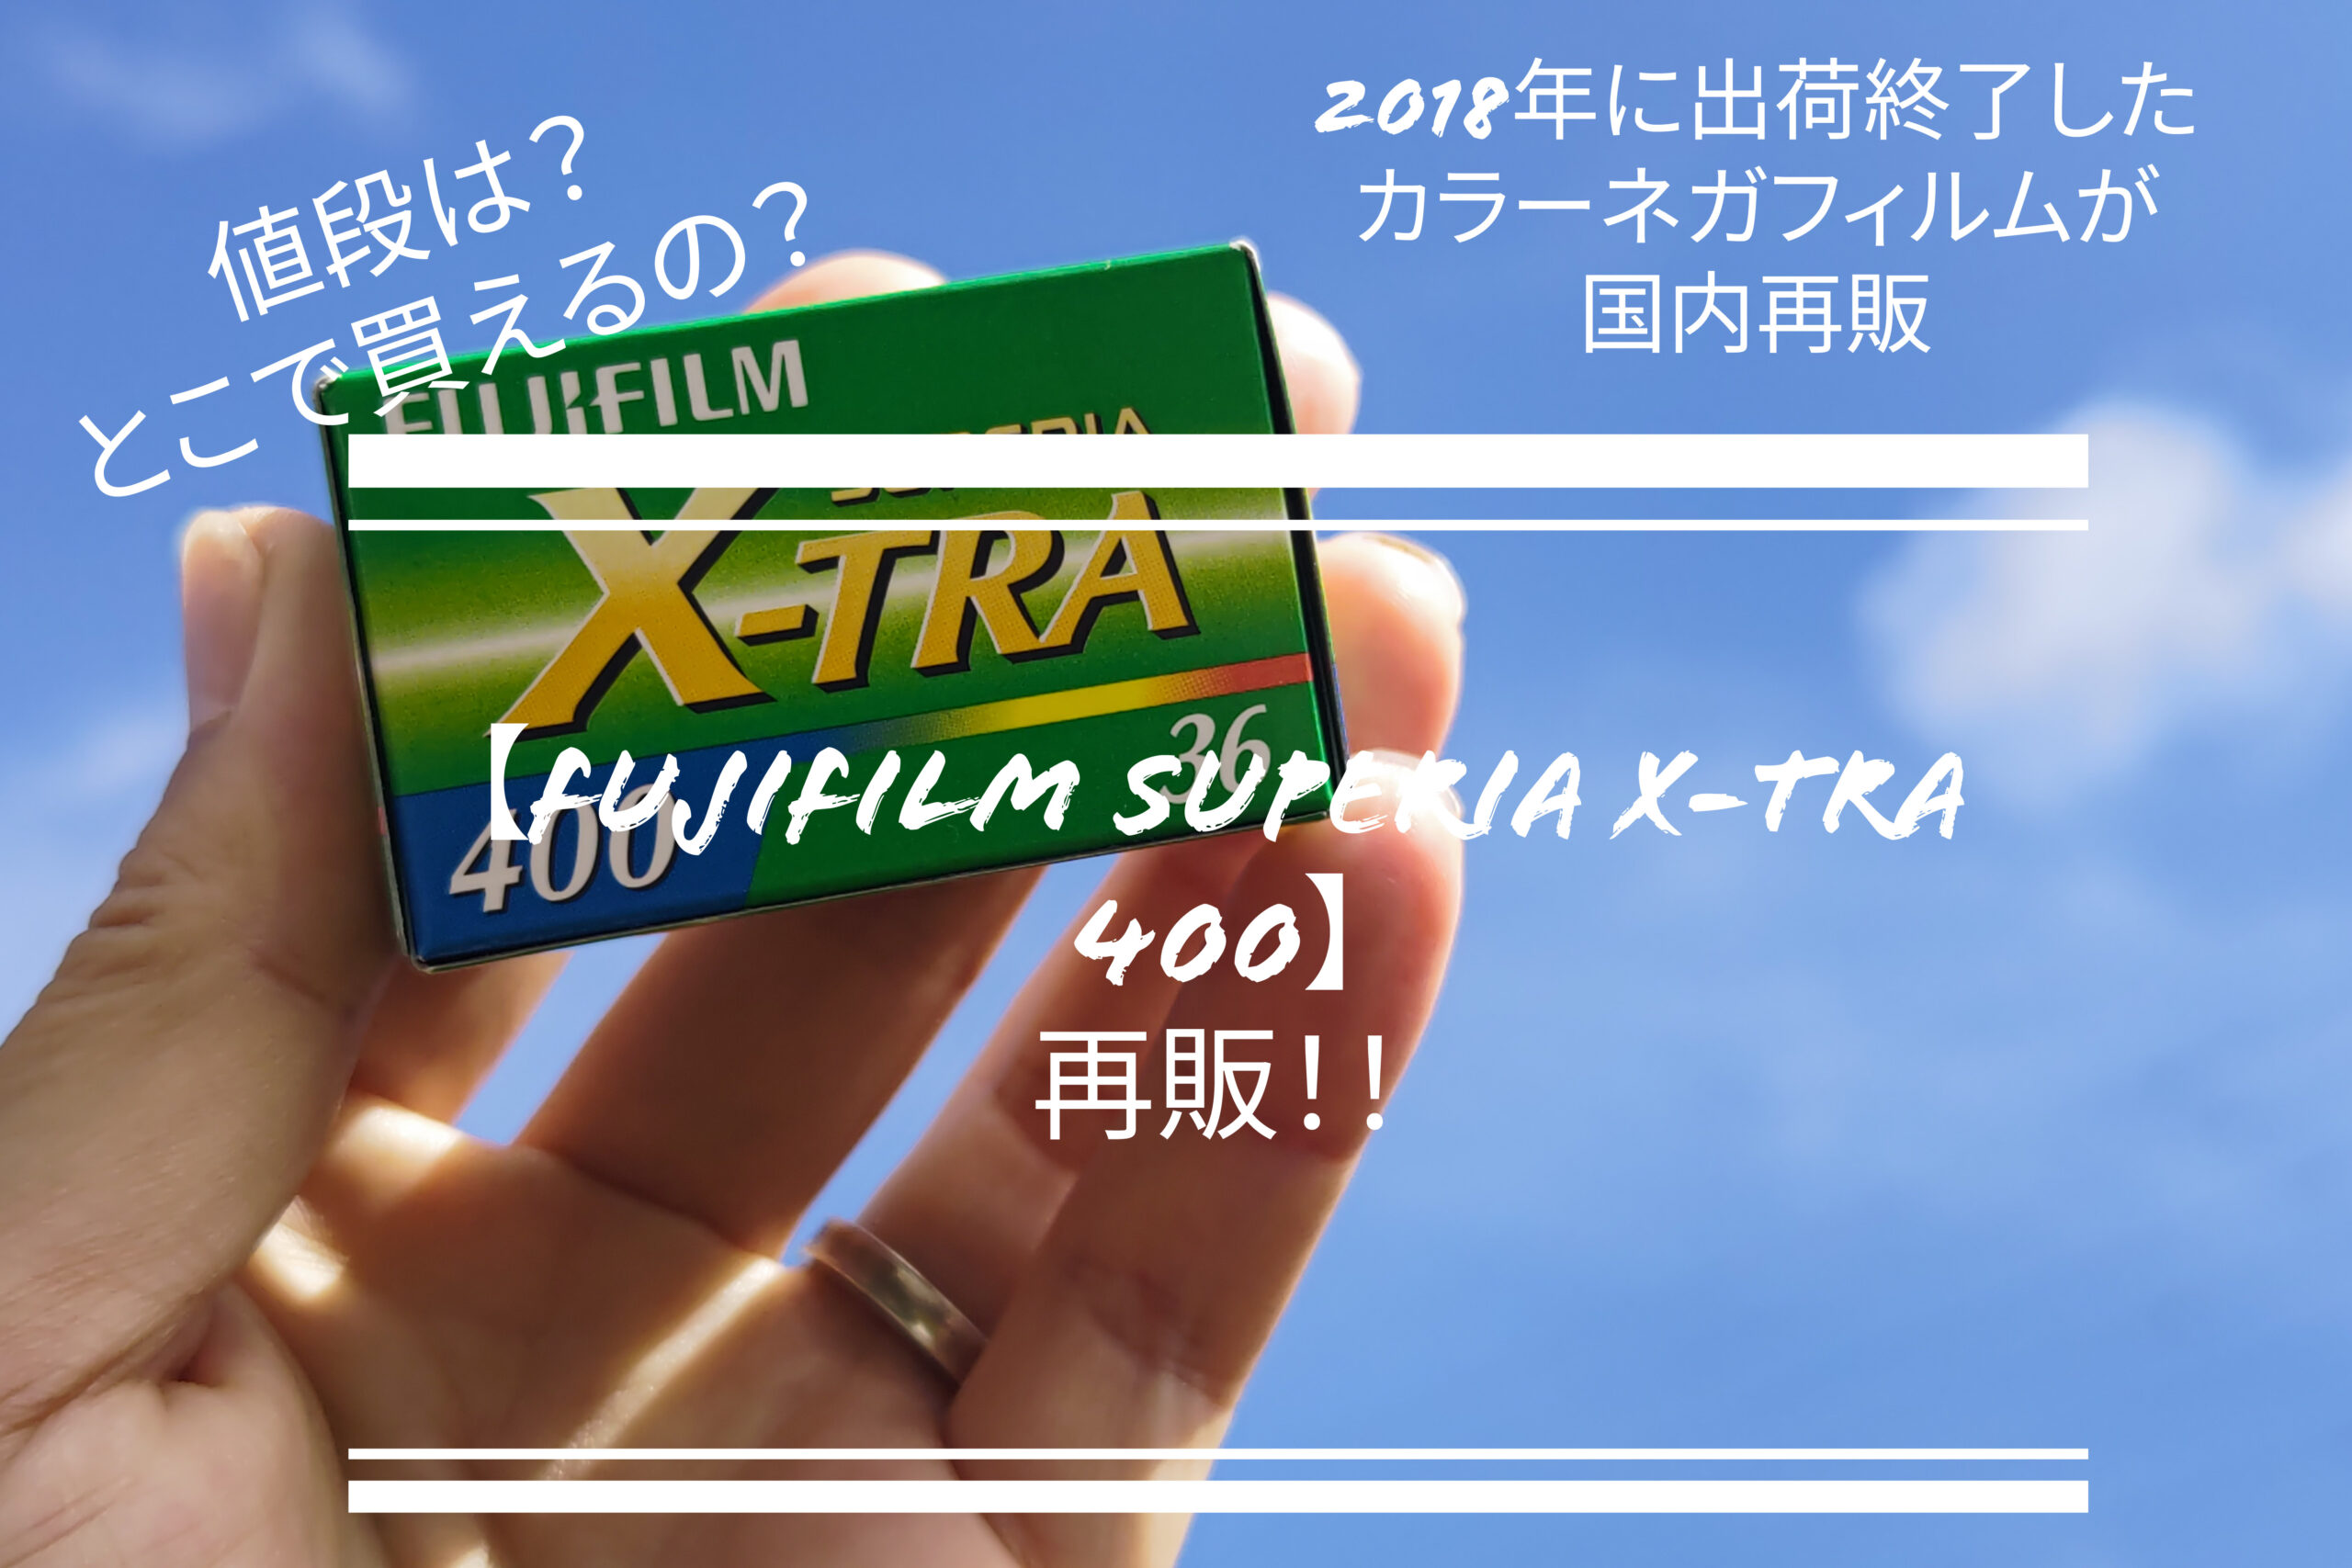 FUJIFILM X-tra400 Premium400 カラーネガフィルム